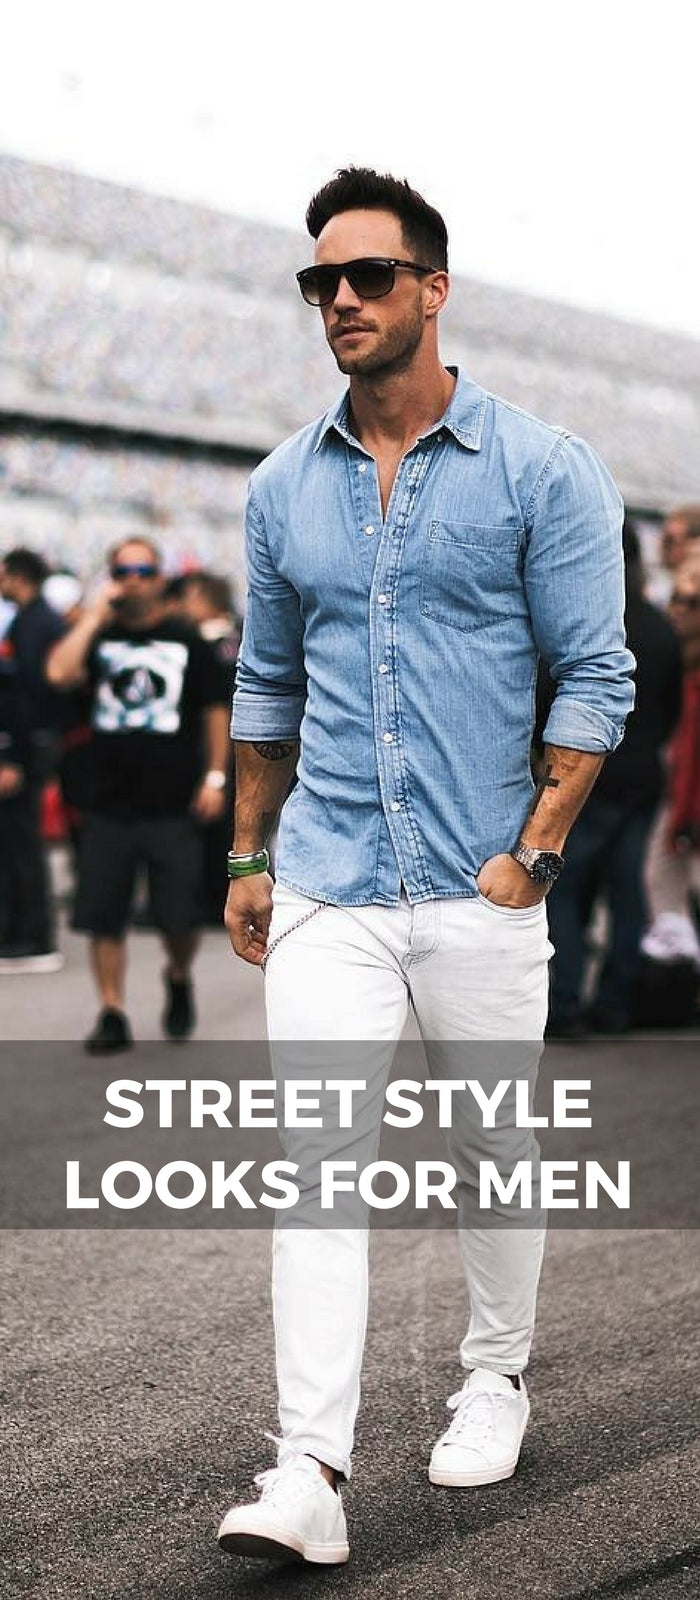 Street style looks for men magic fox